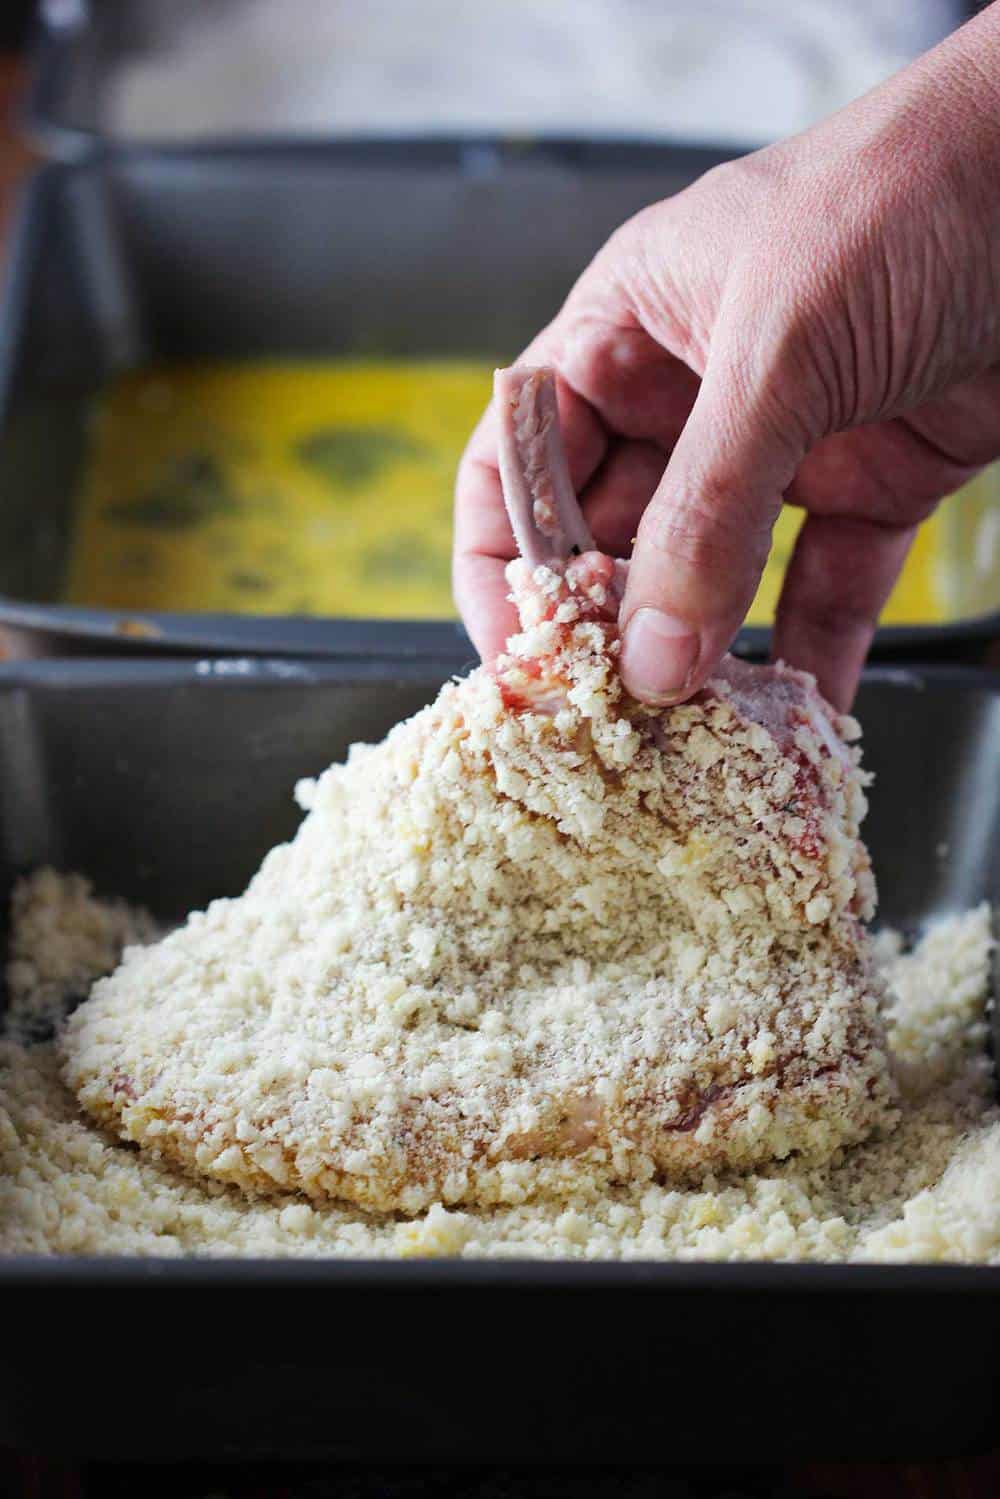 A hand dredging a pork chop in bread crumbs. 